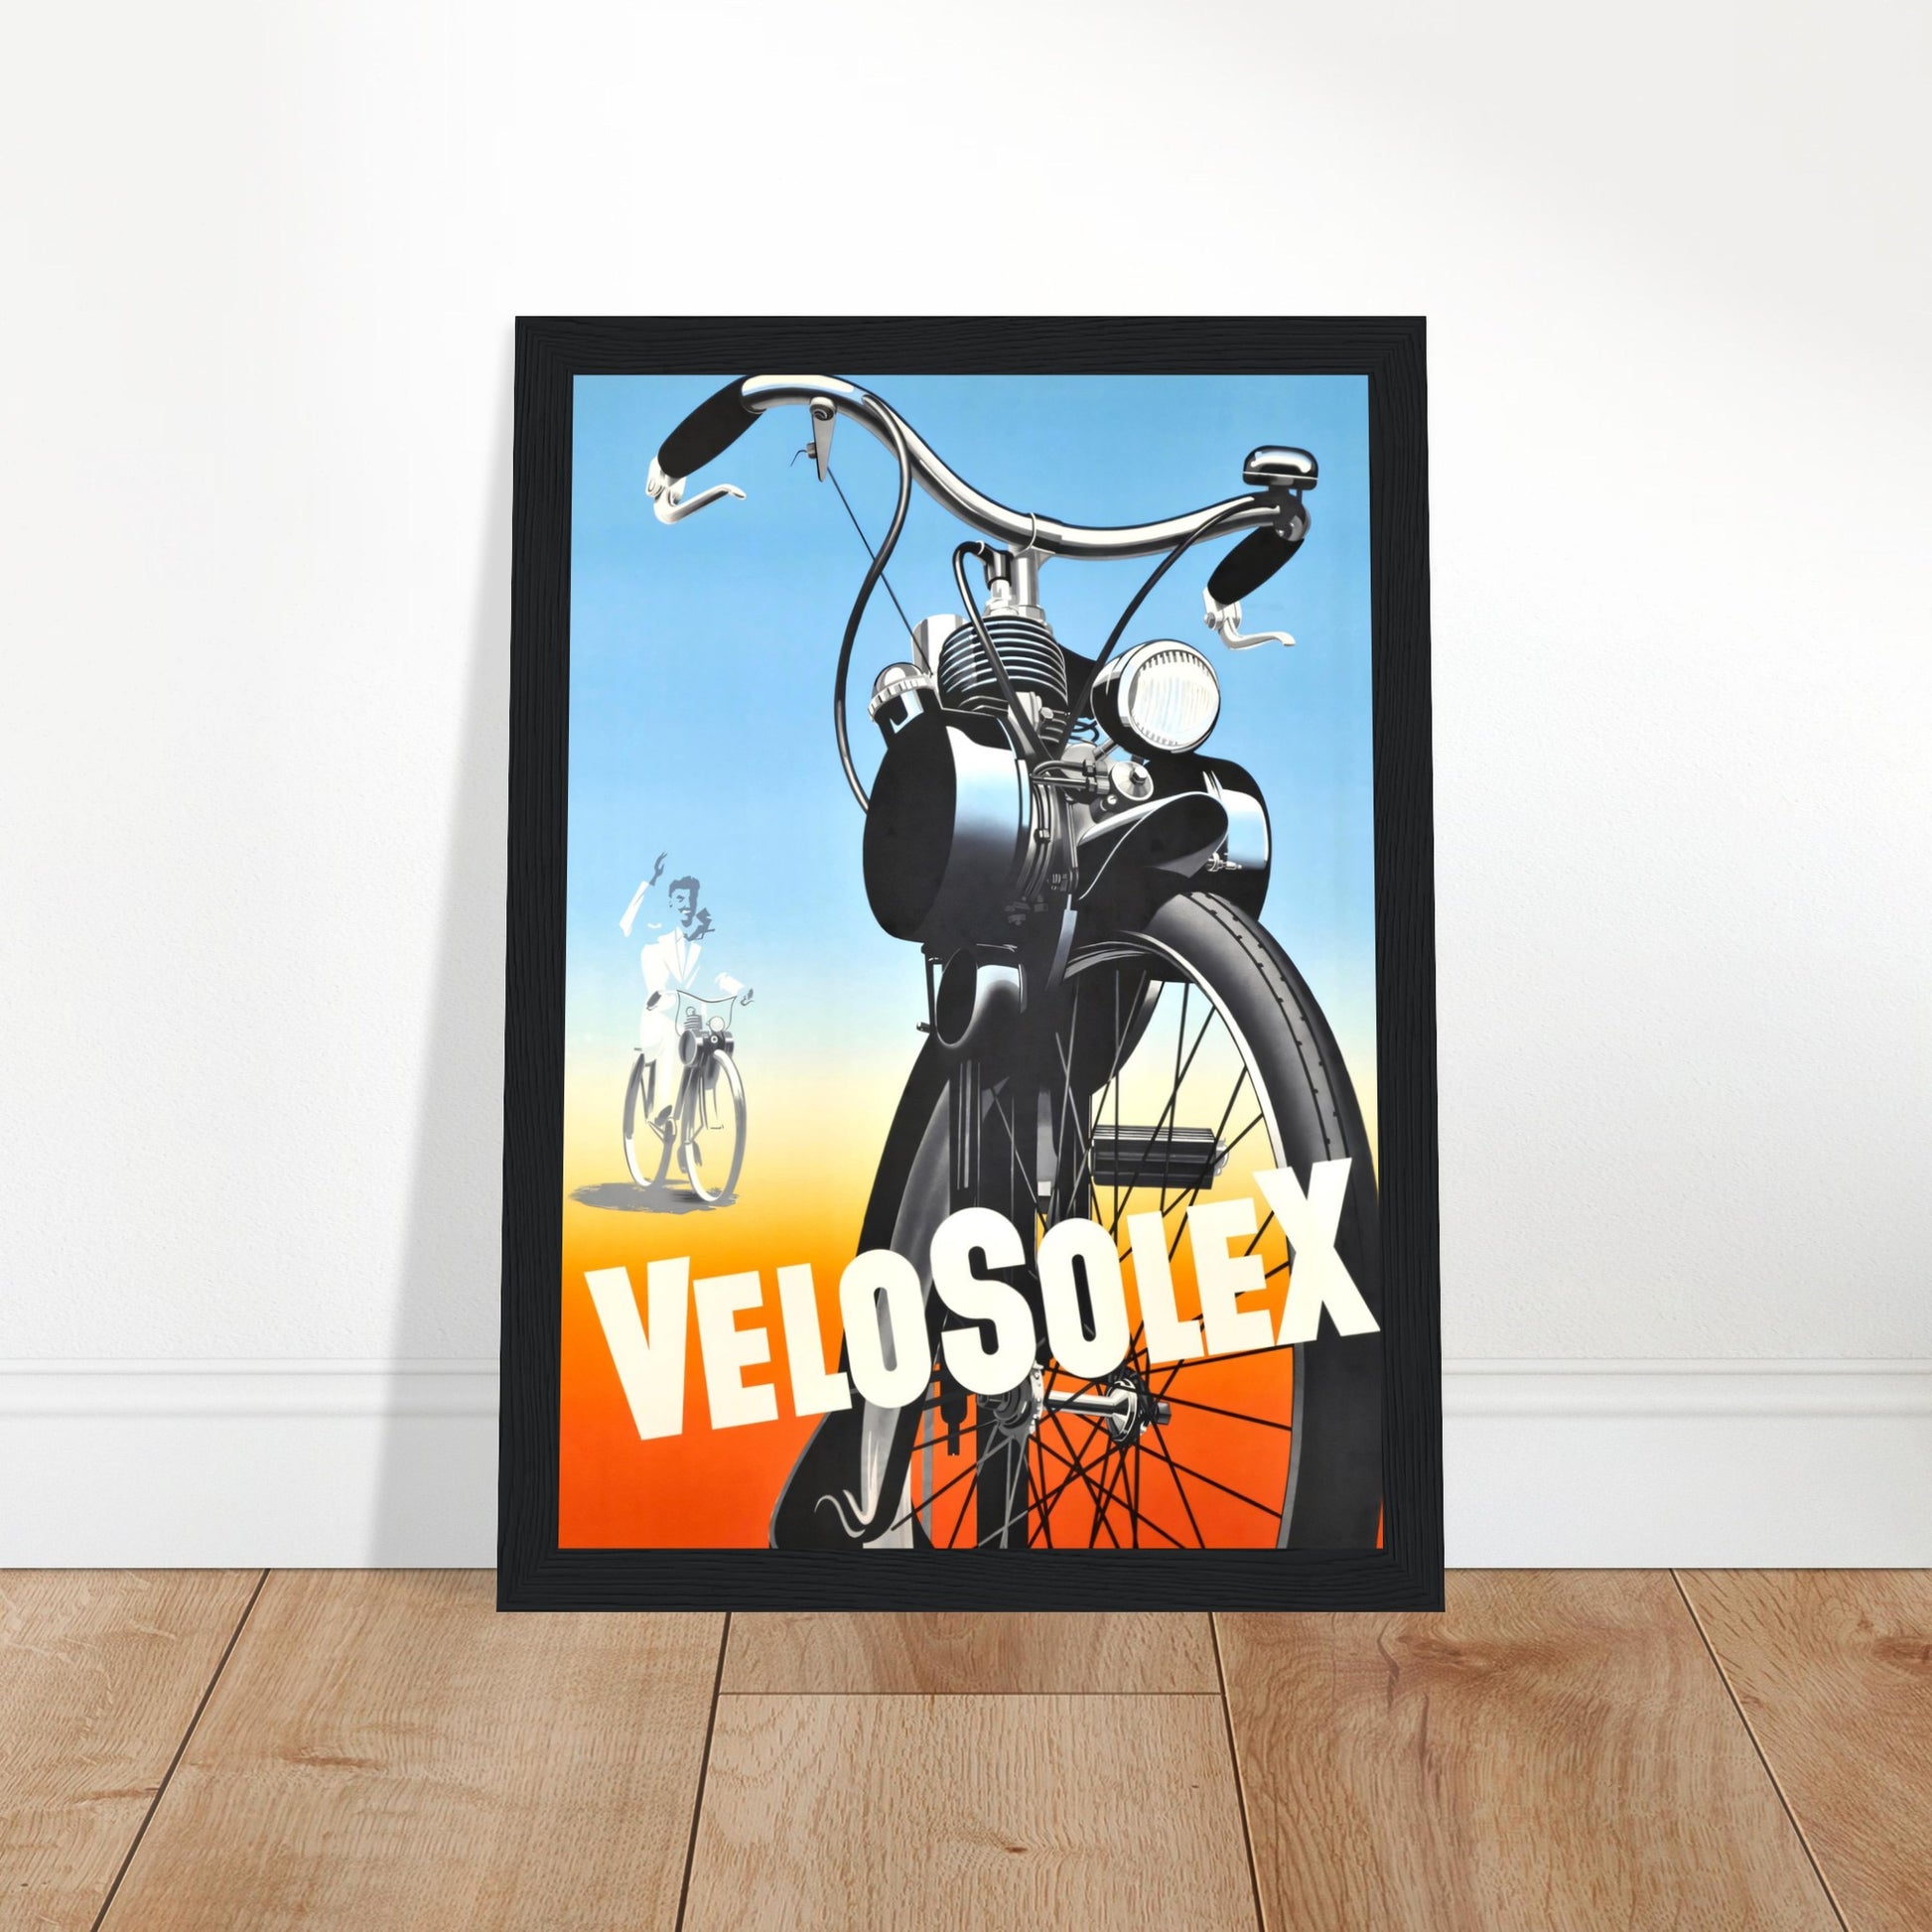 Vintage Poster Reprint, Velo Solex, Wall Art on Premium Paper - Posterify